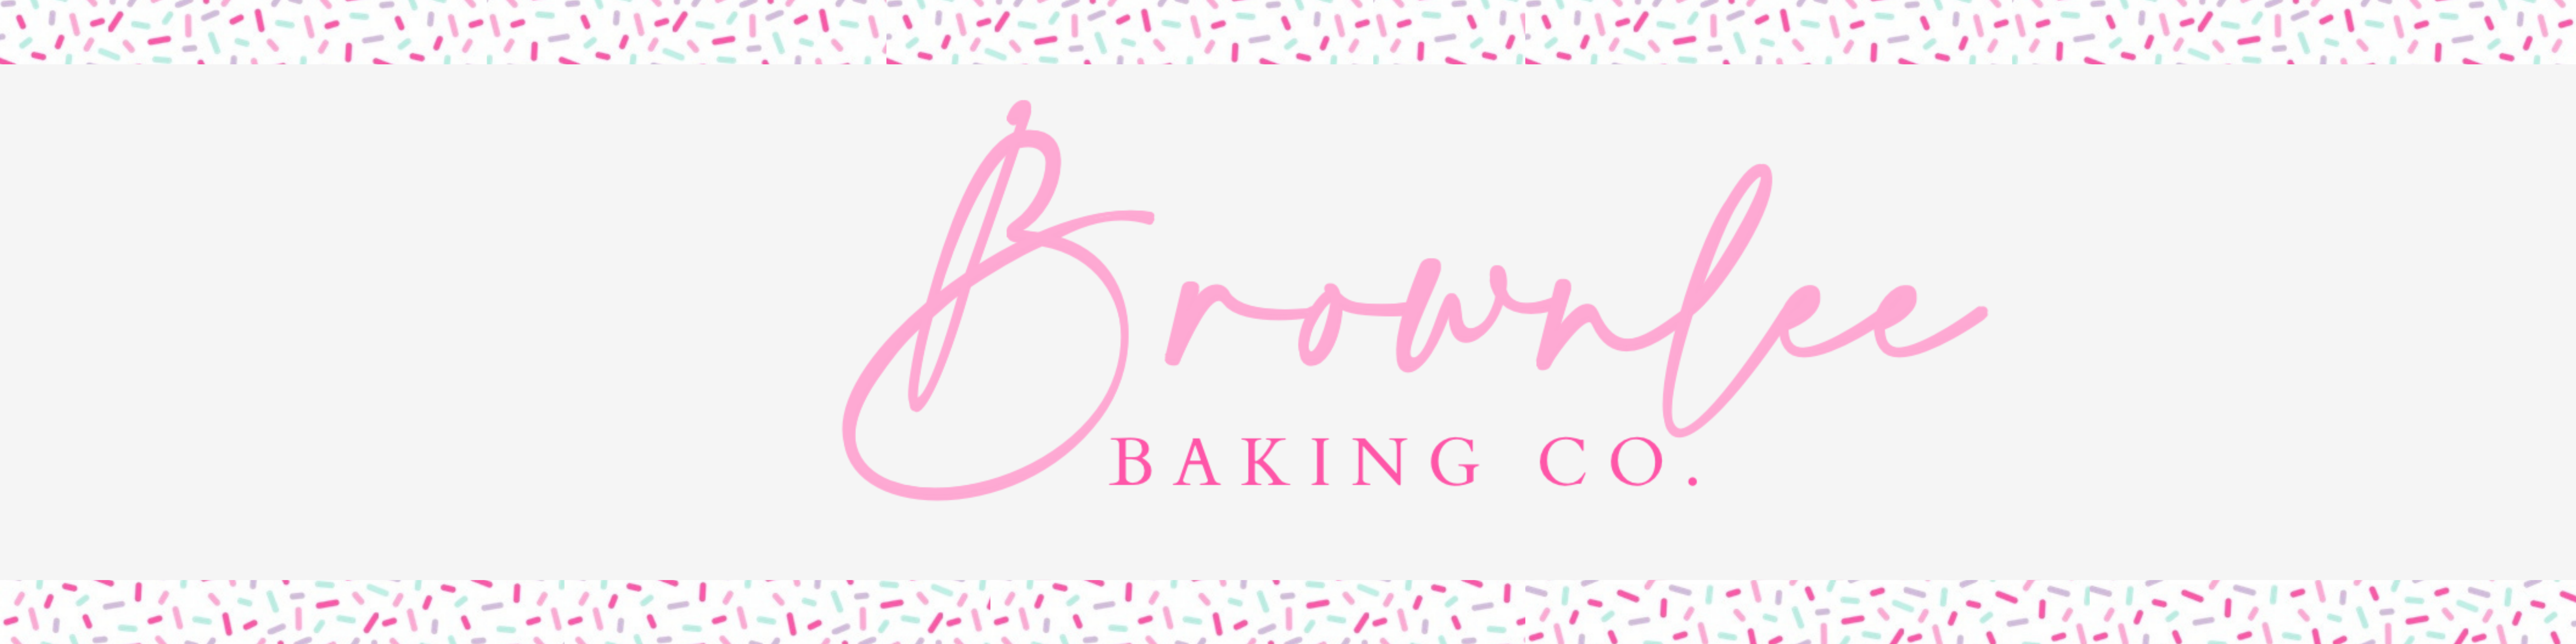 Brownlee Baking Co.